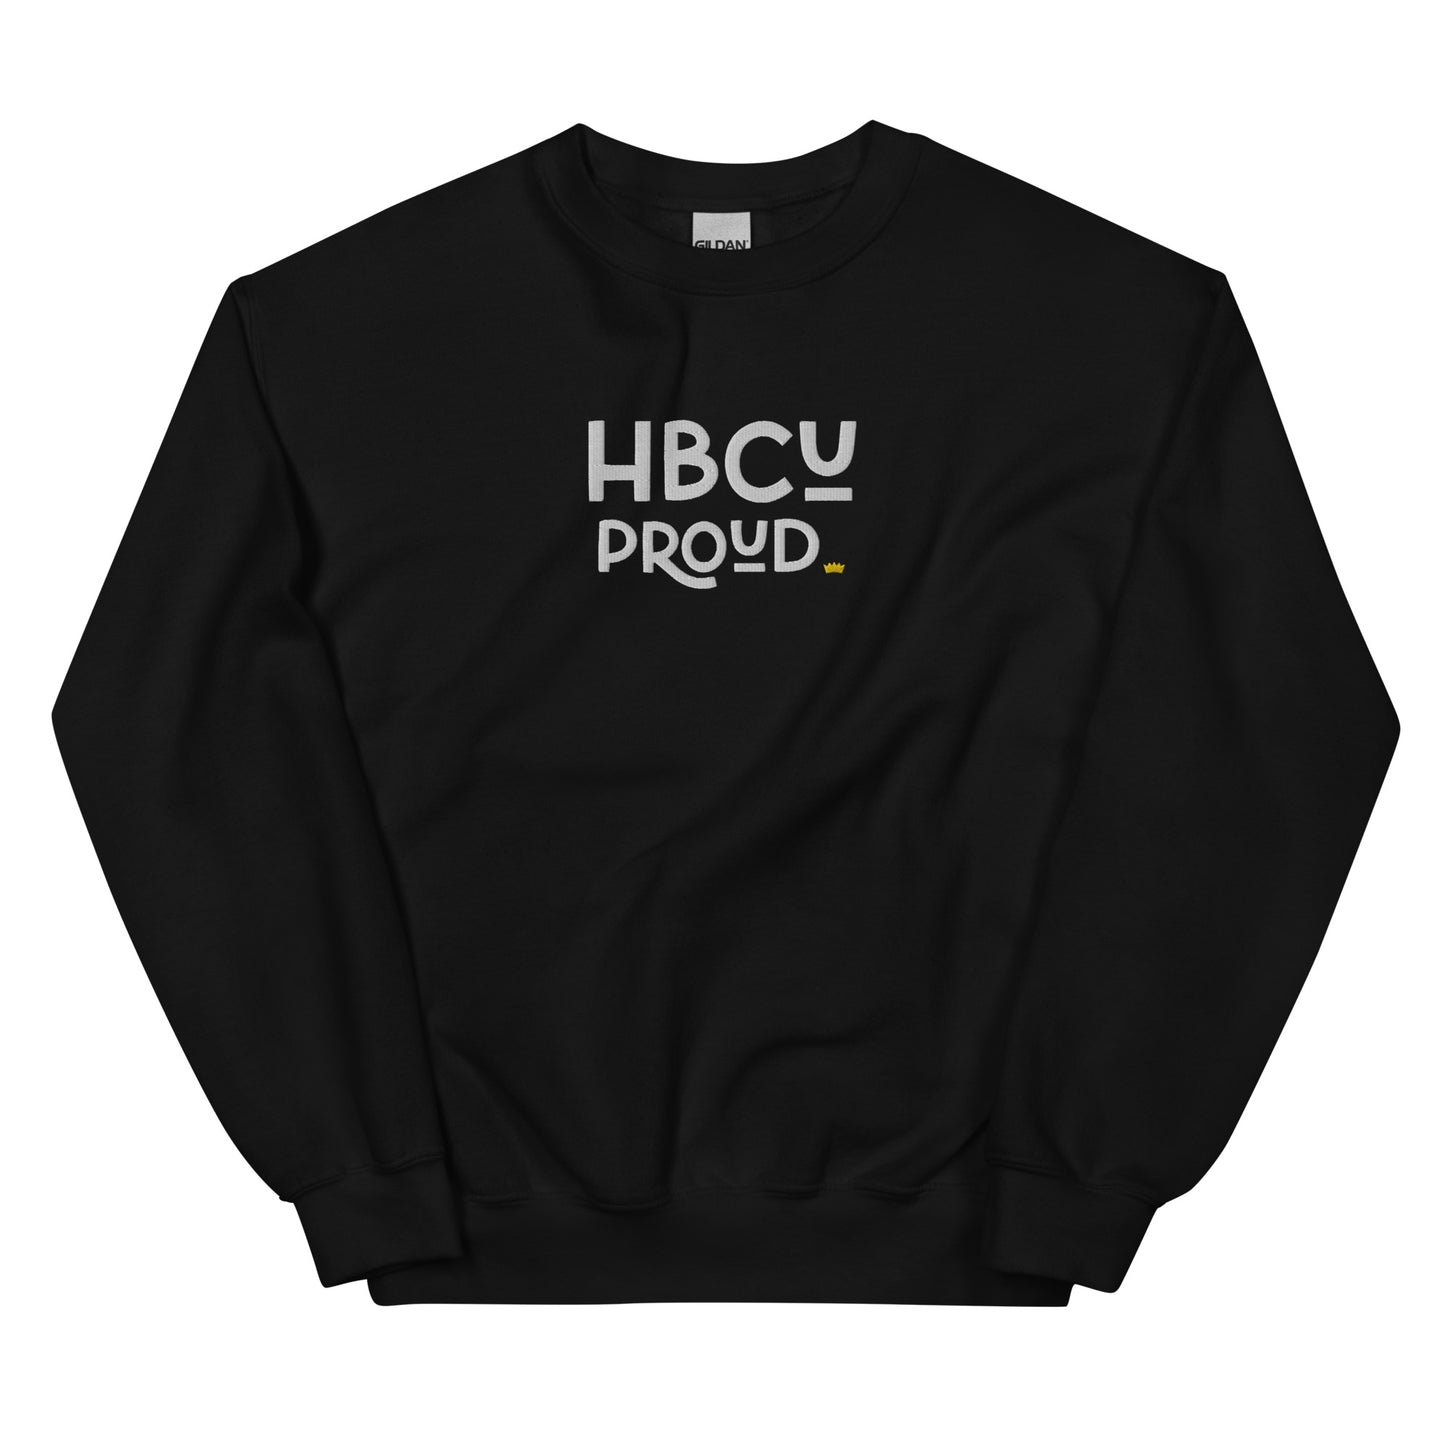 Proud - HBCU Embroidered Unisex Sweatshirt